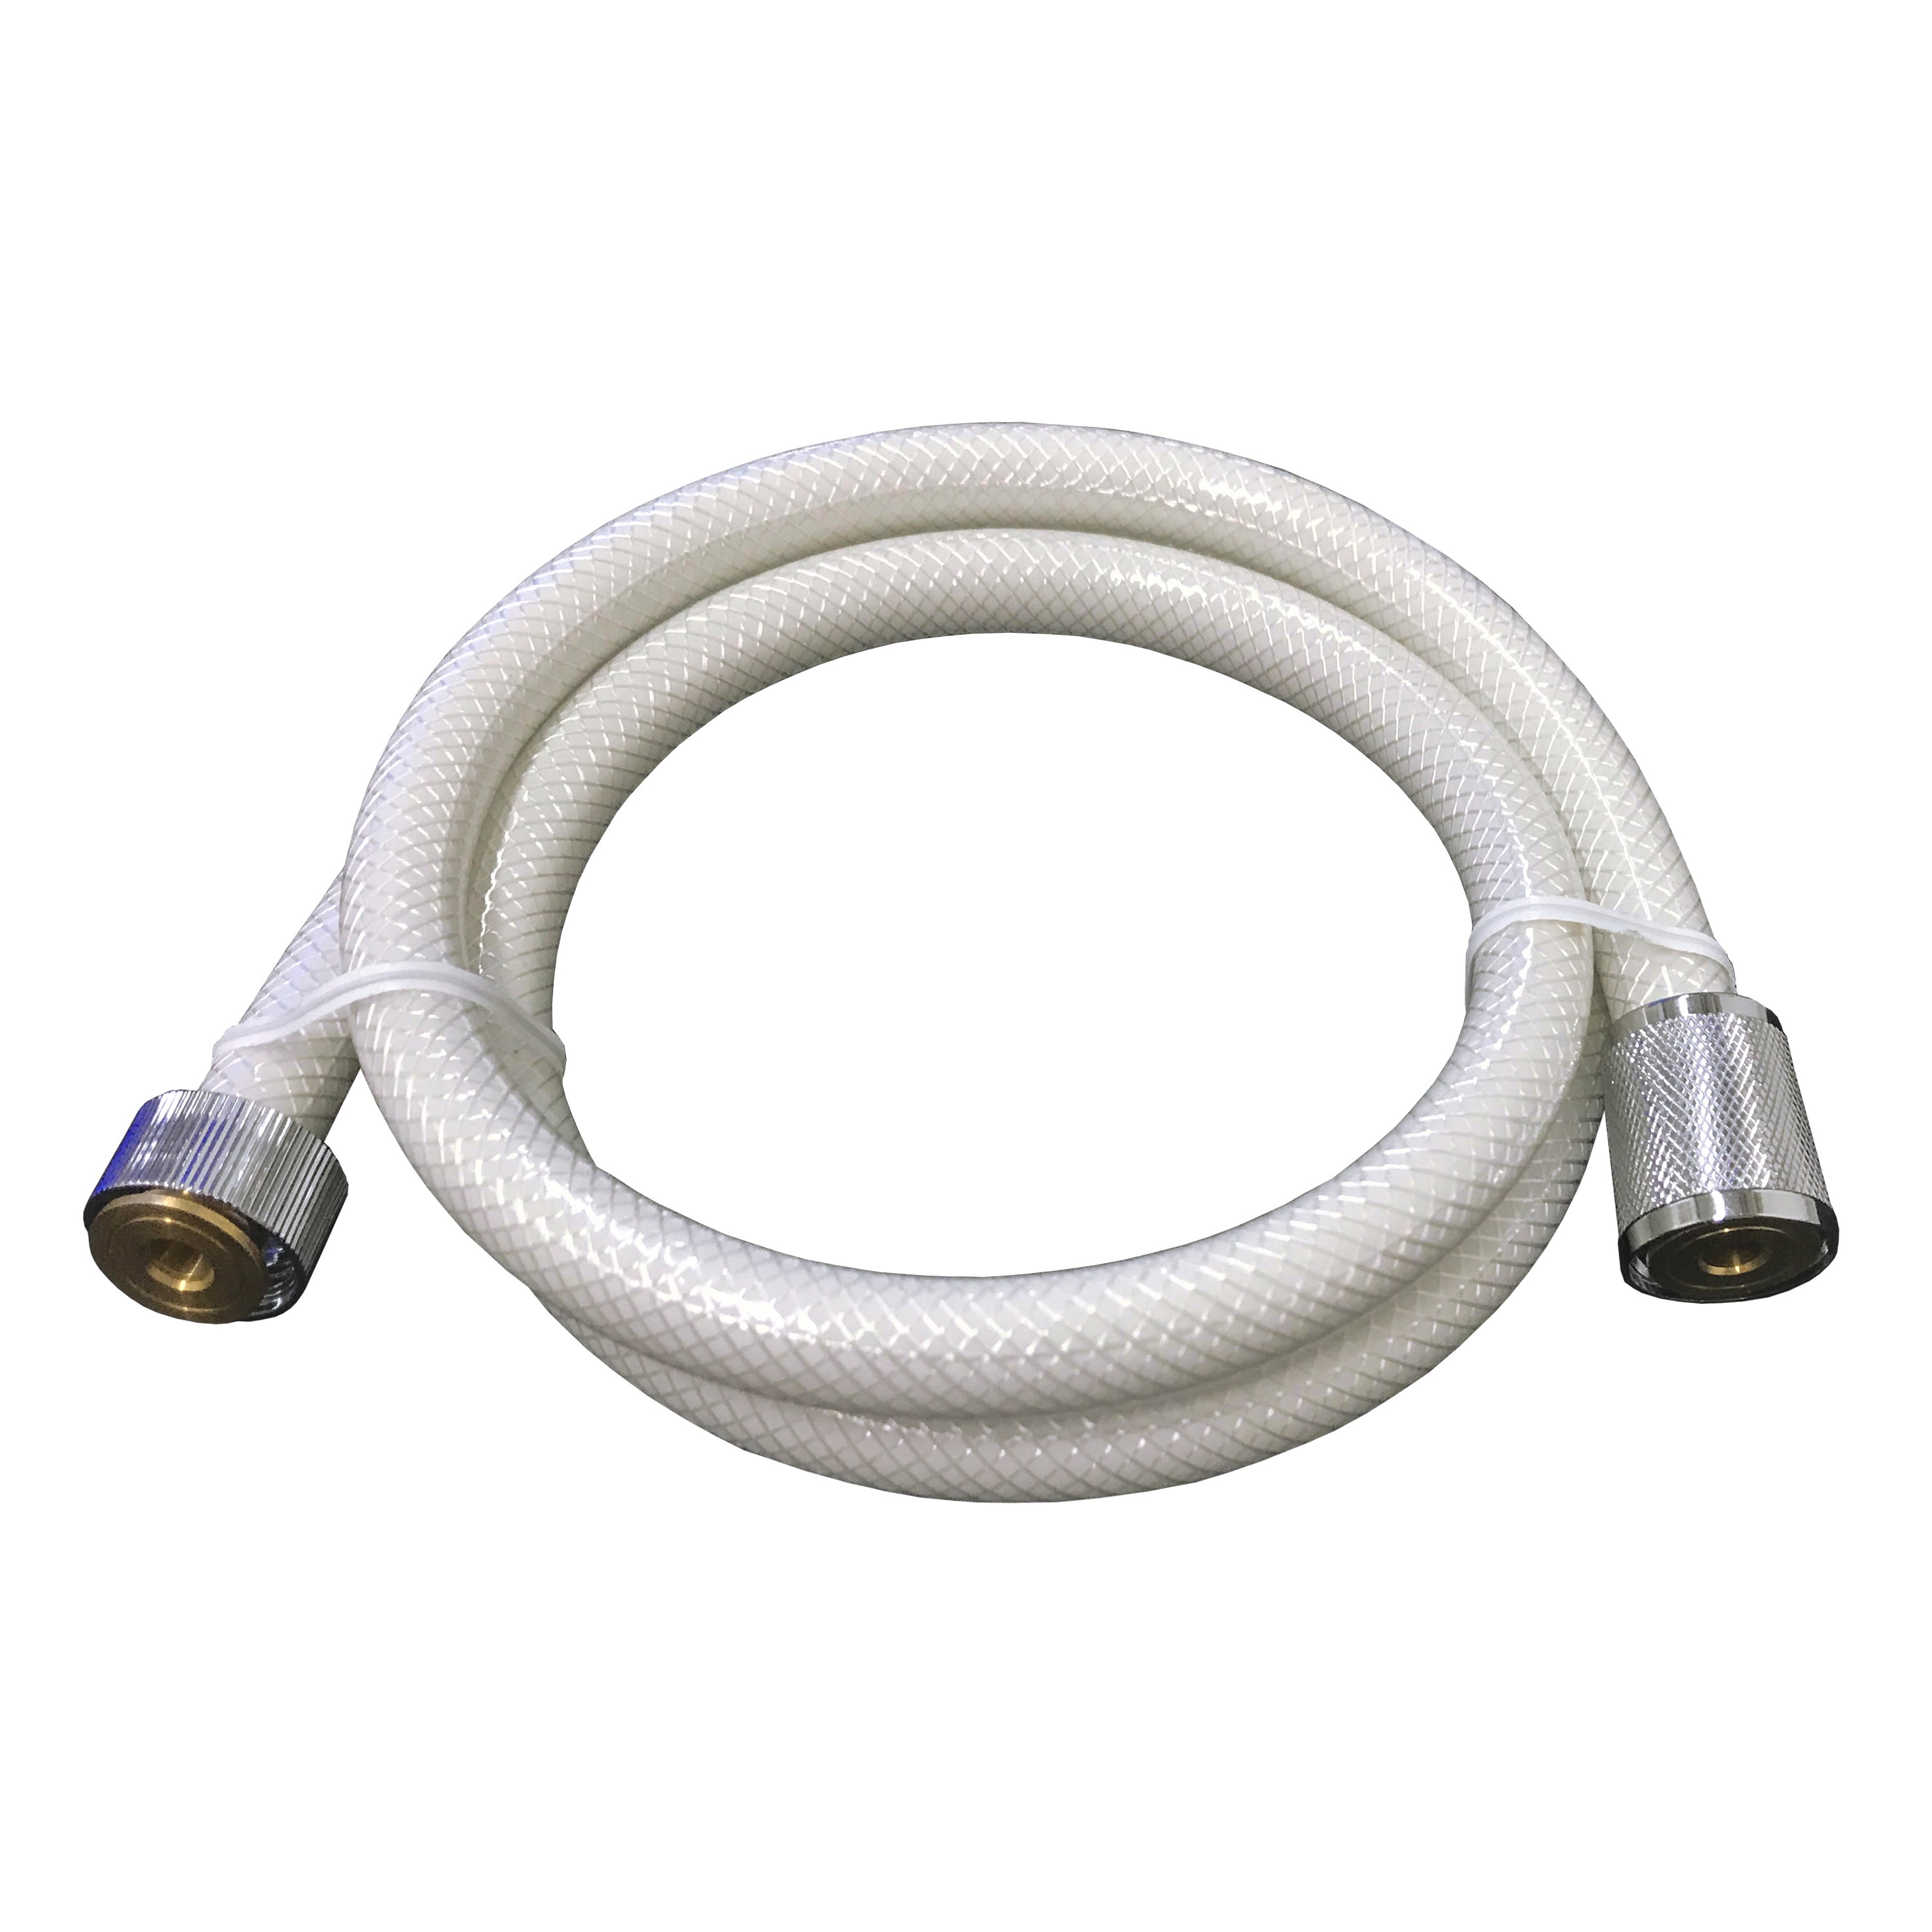 HUSKY 612-2.1m (7' PVC Flexible Hose (White))